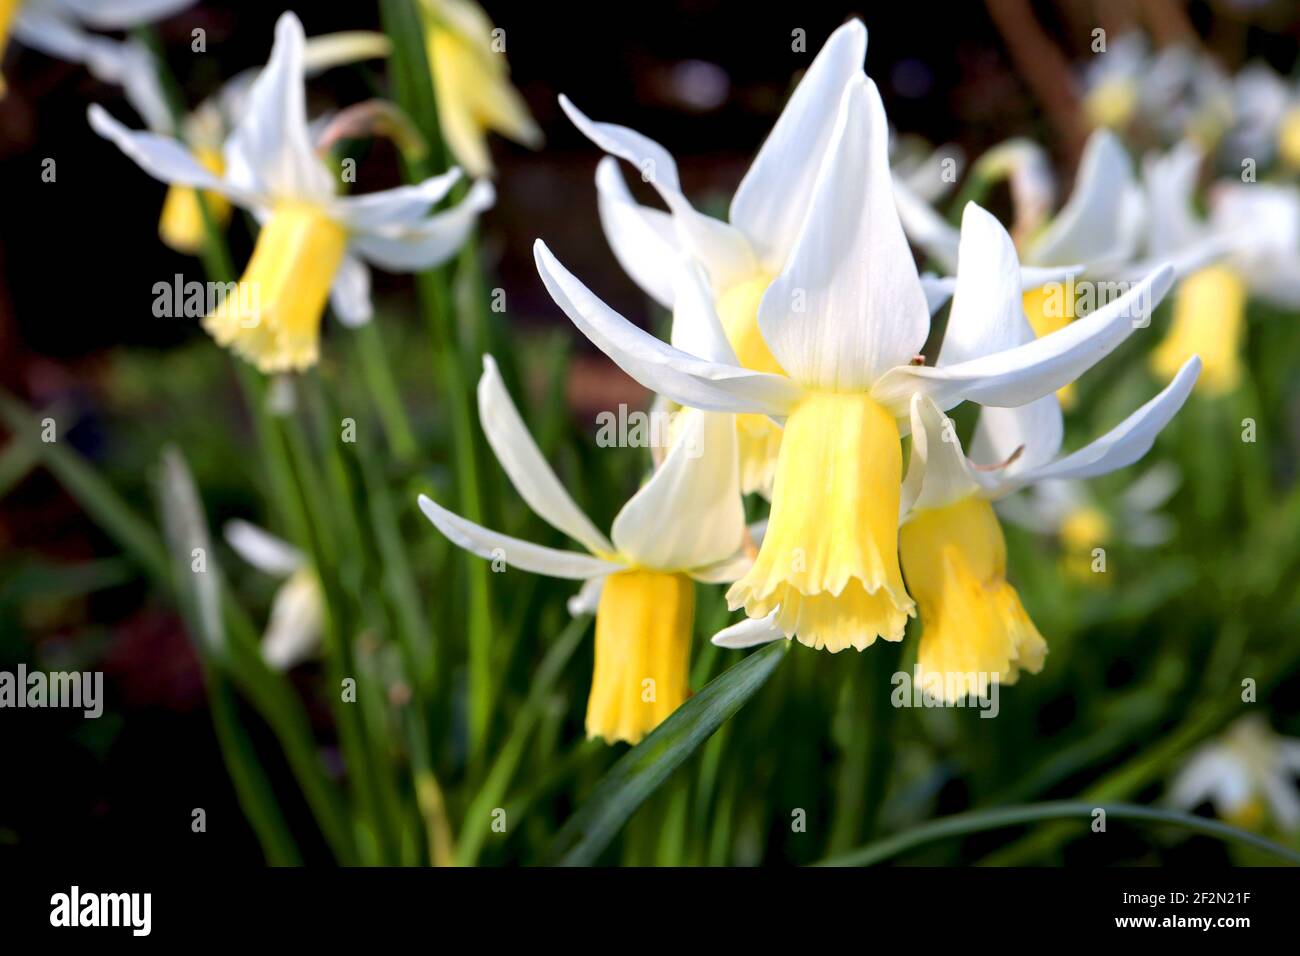 Narcisse 'Trena' / Daffodil Trena Division 6 Cyclamineus daffodils jonquilles avec pétales blancs balayés et longues trompettes jaunes, mars, Angleterre, Banque D'Images